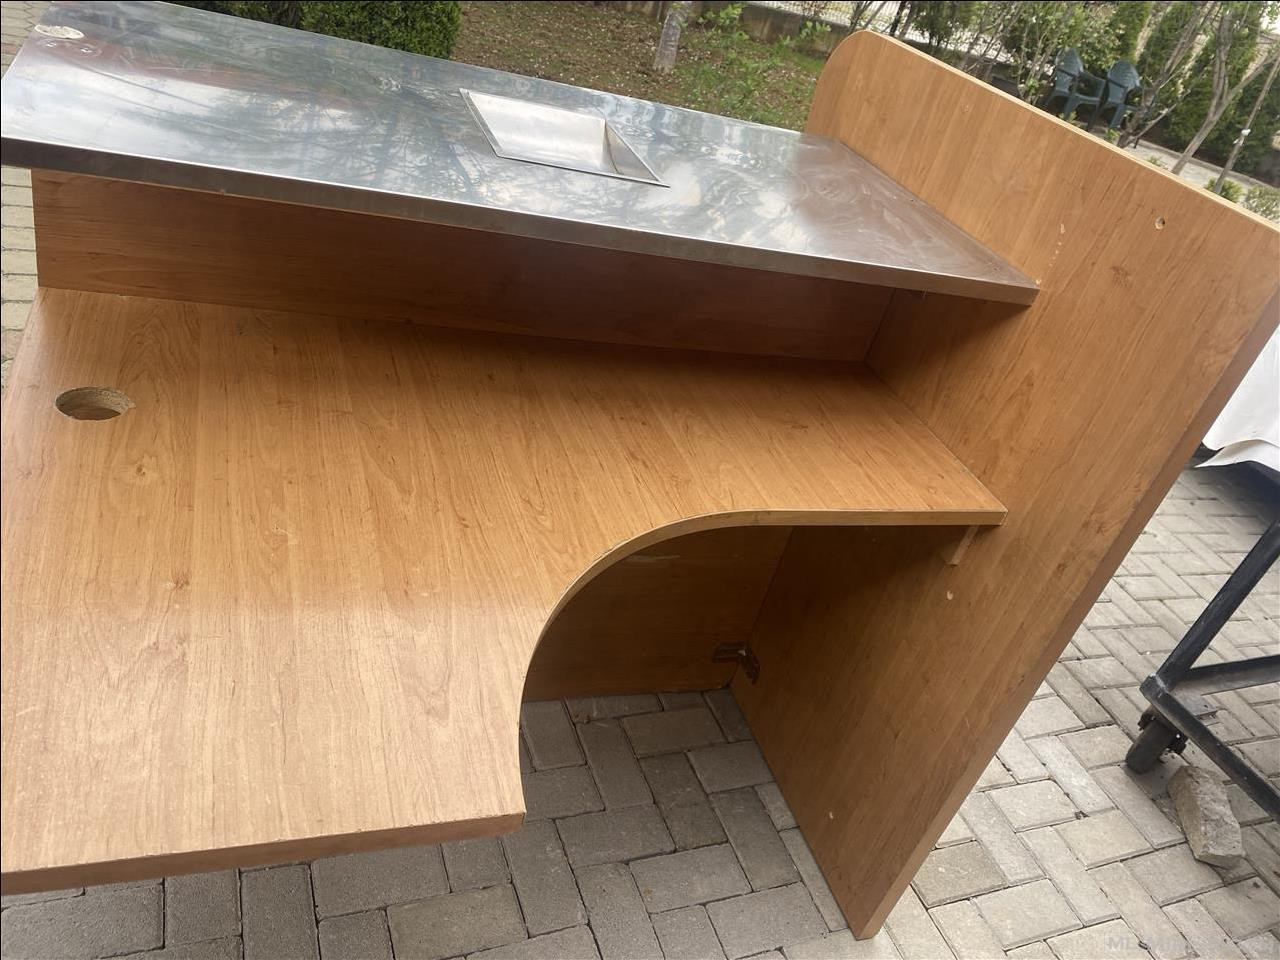 Shank orman tavolin per zyre